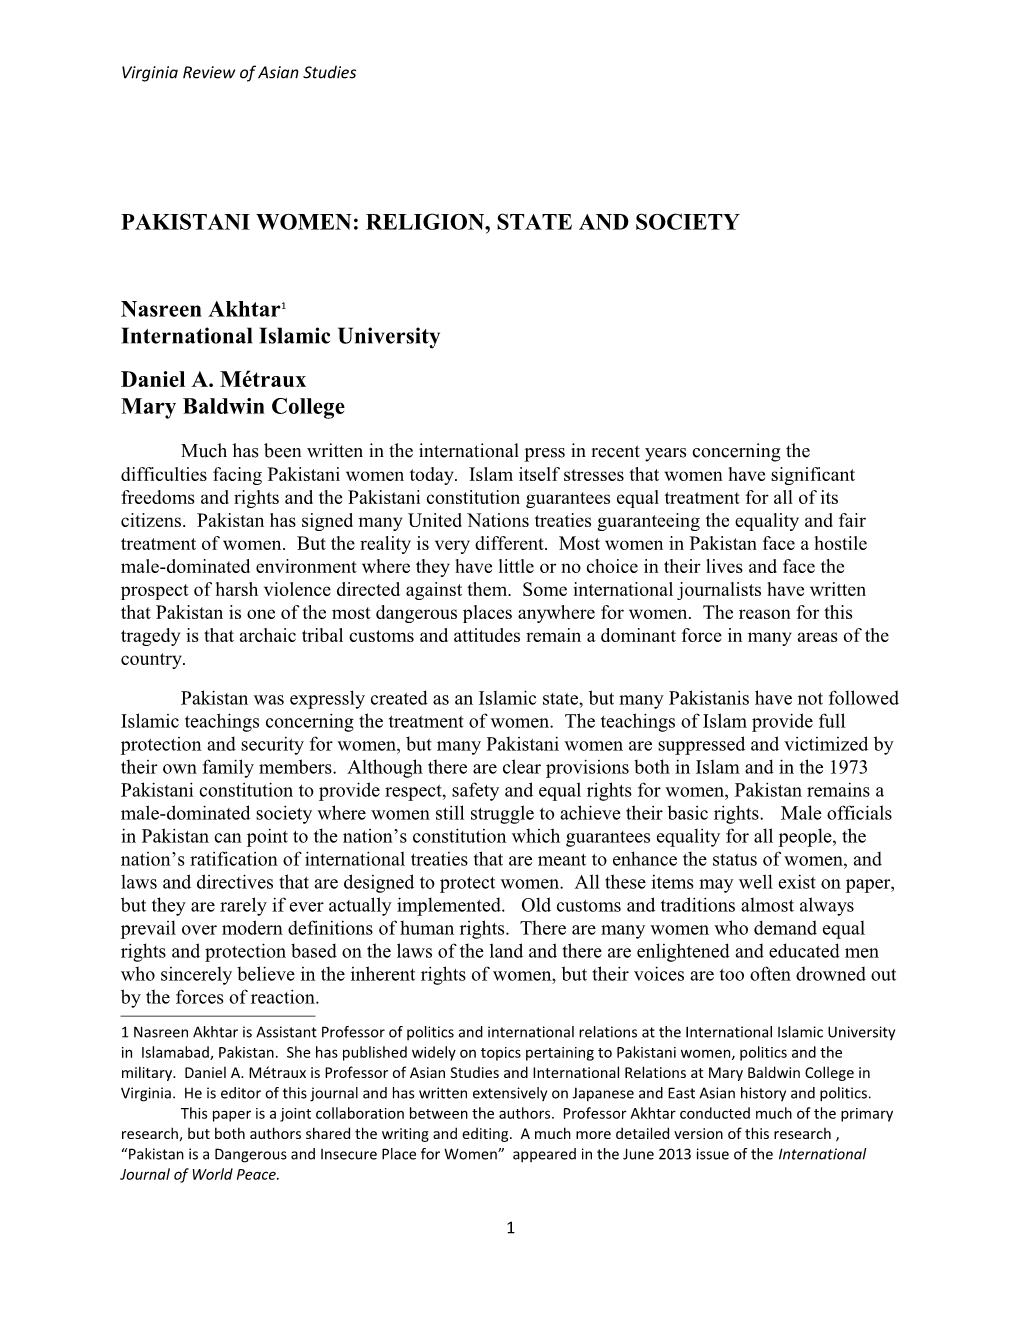 Pakistani Women: Religion, State and Society